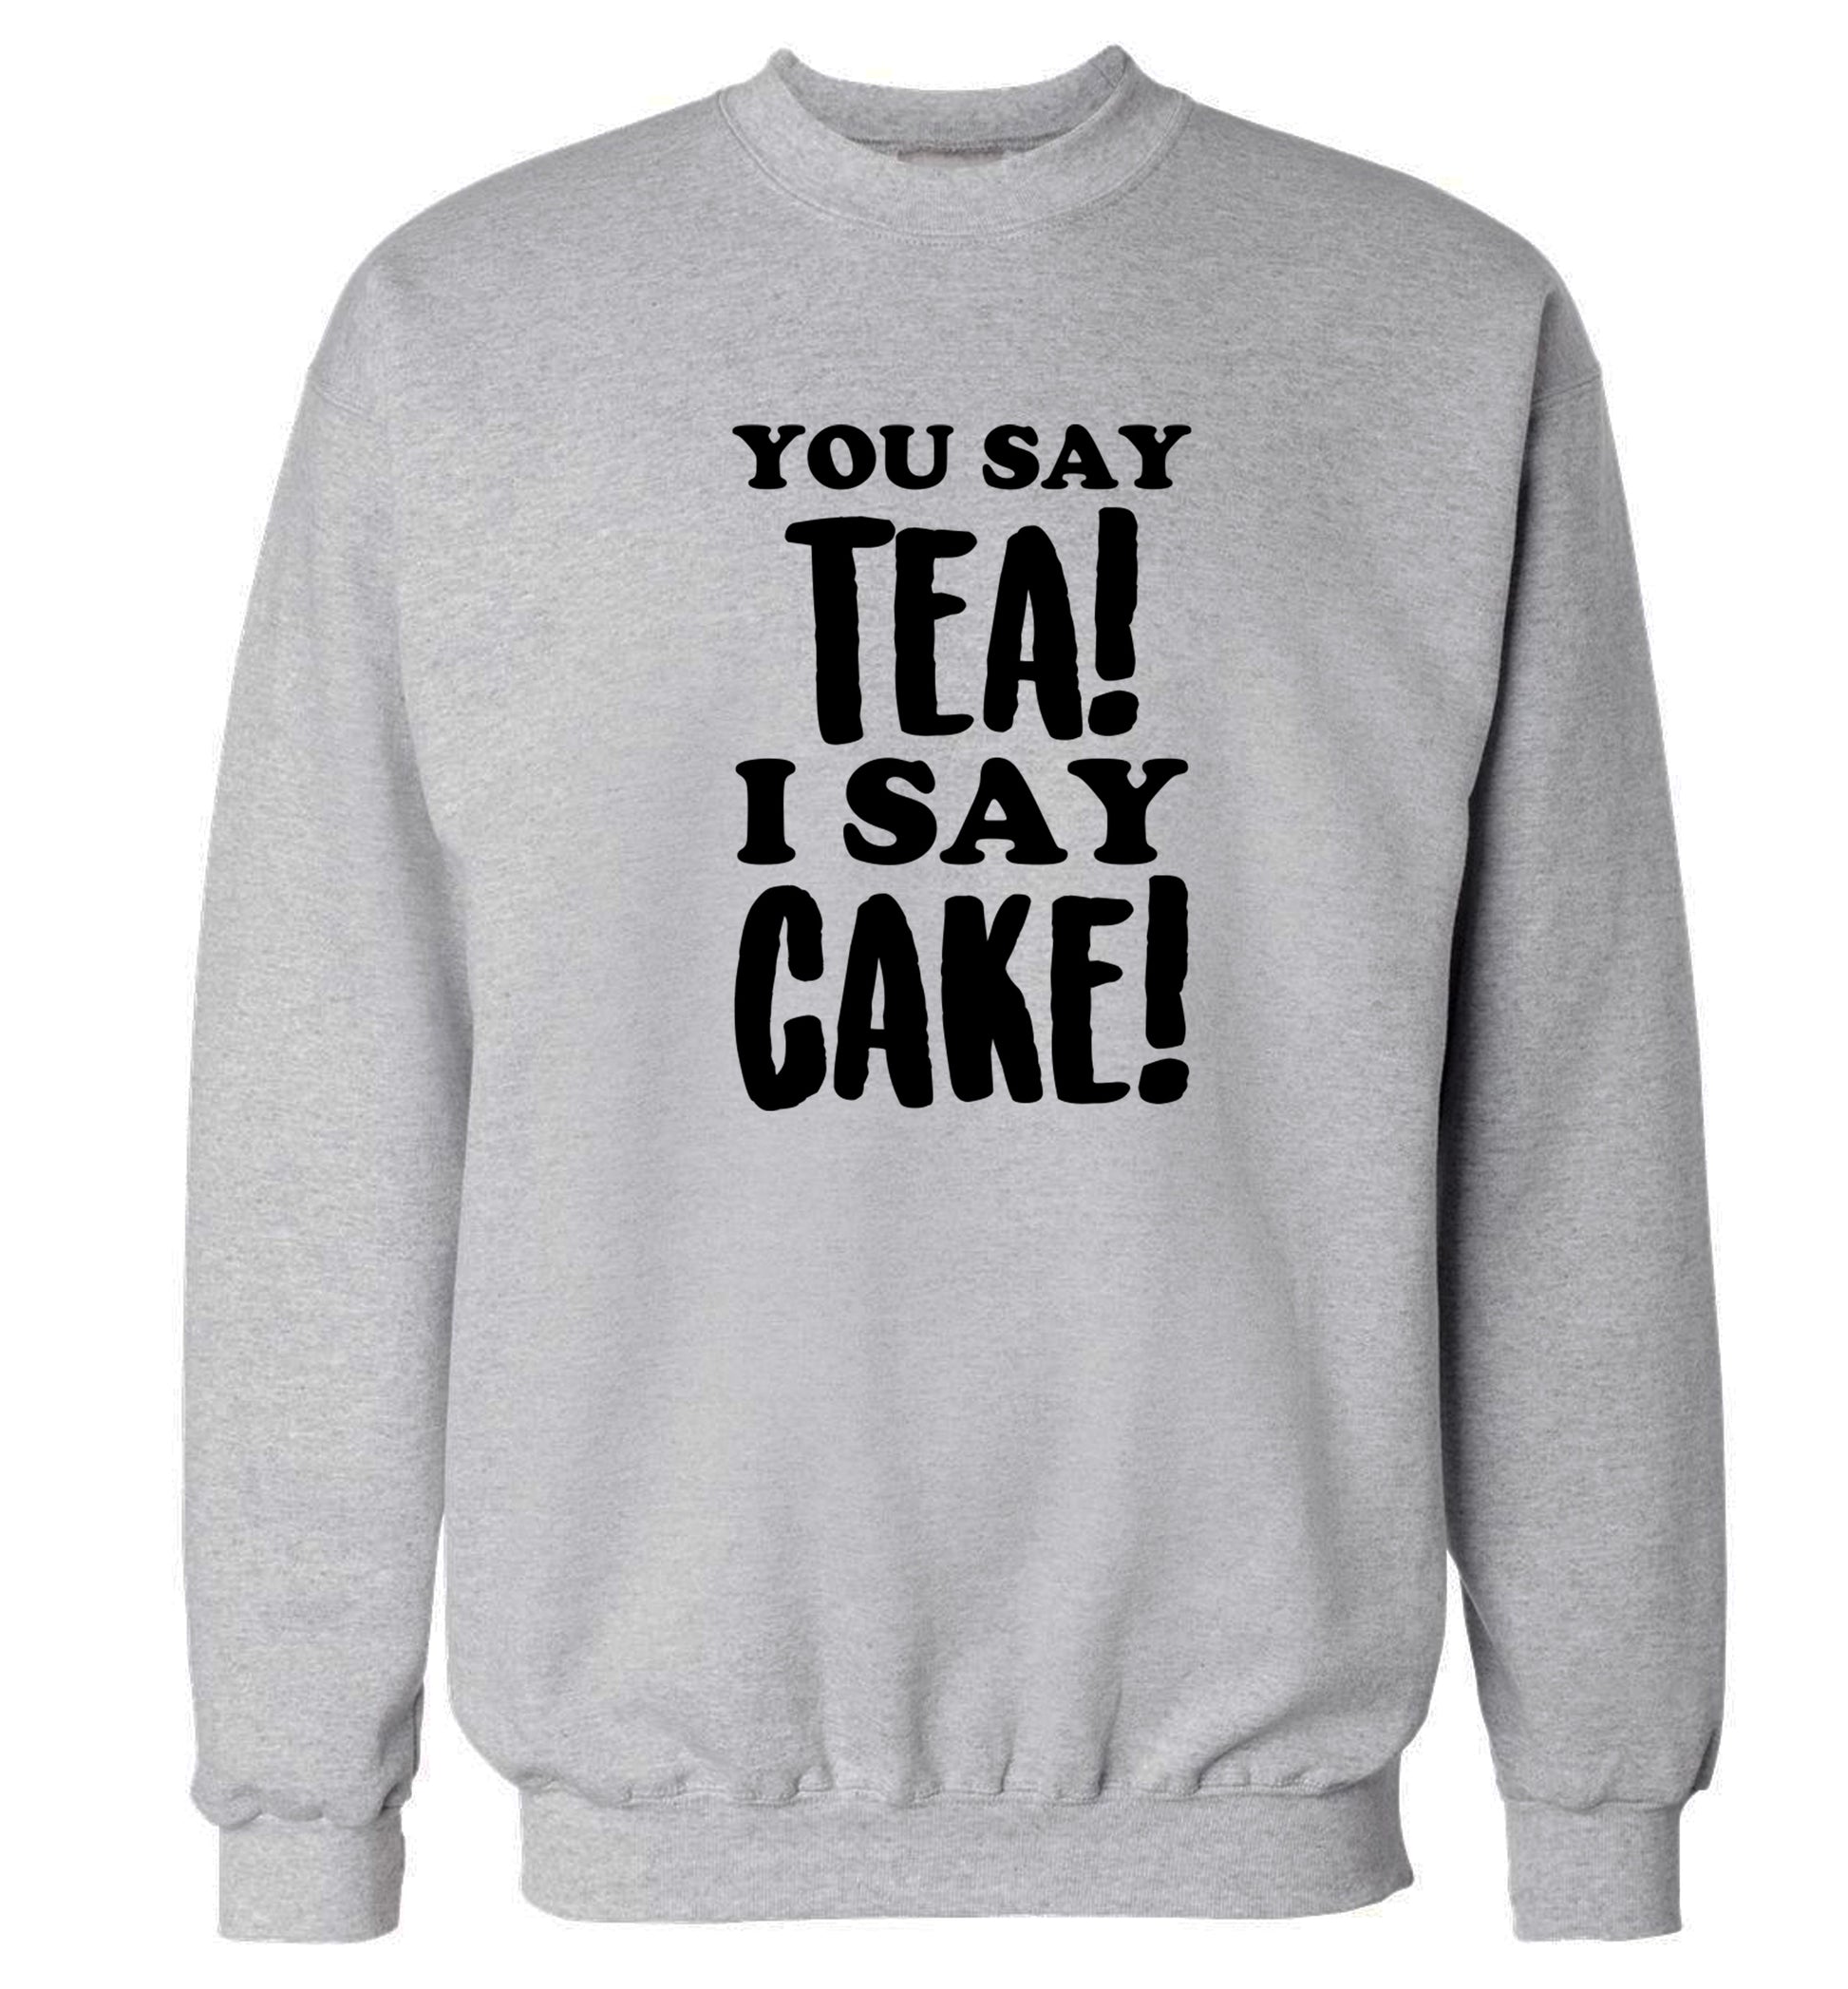 You say tea I say cake! Adult's unisex grey Sweater 2XL